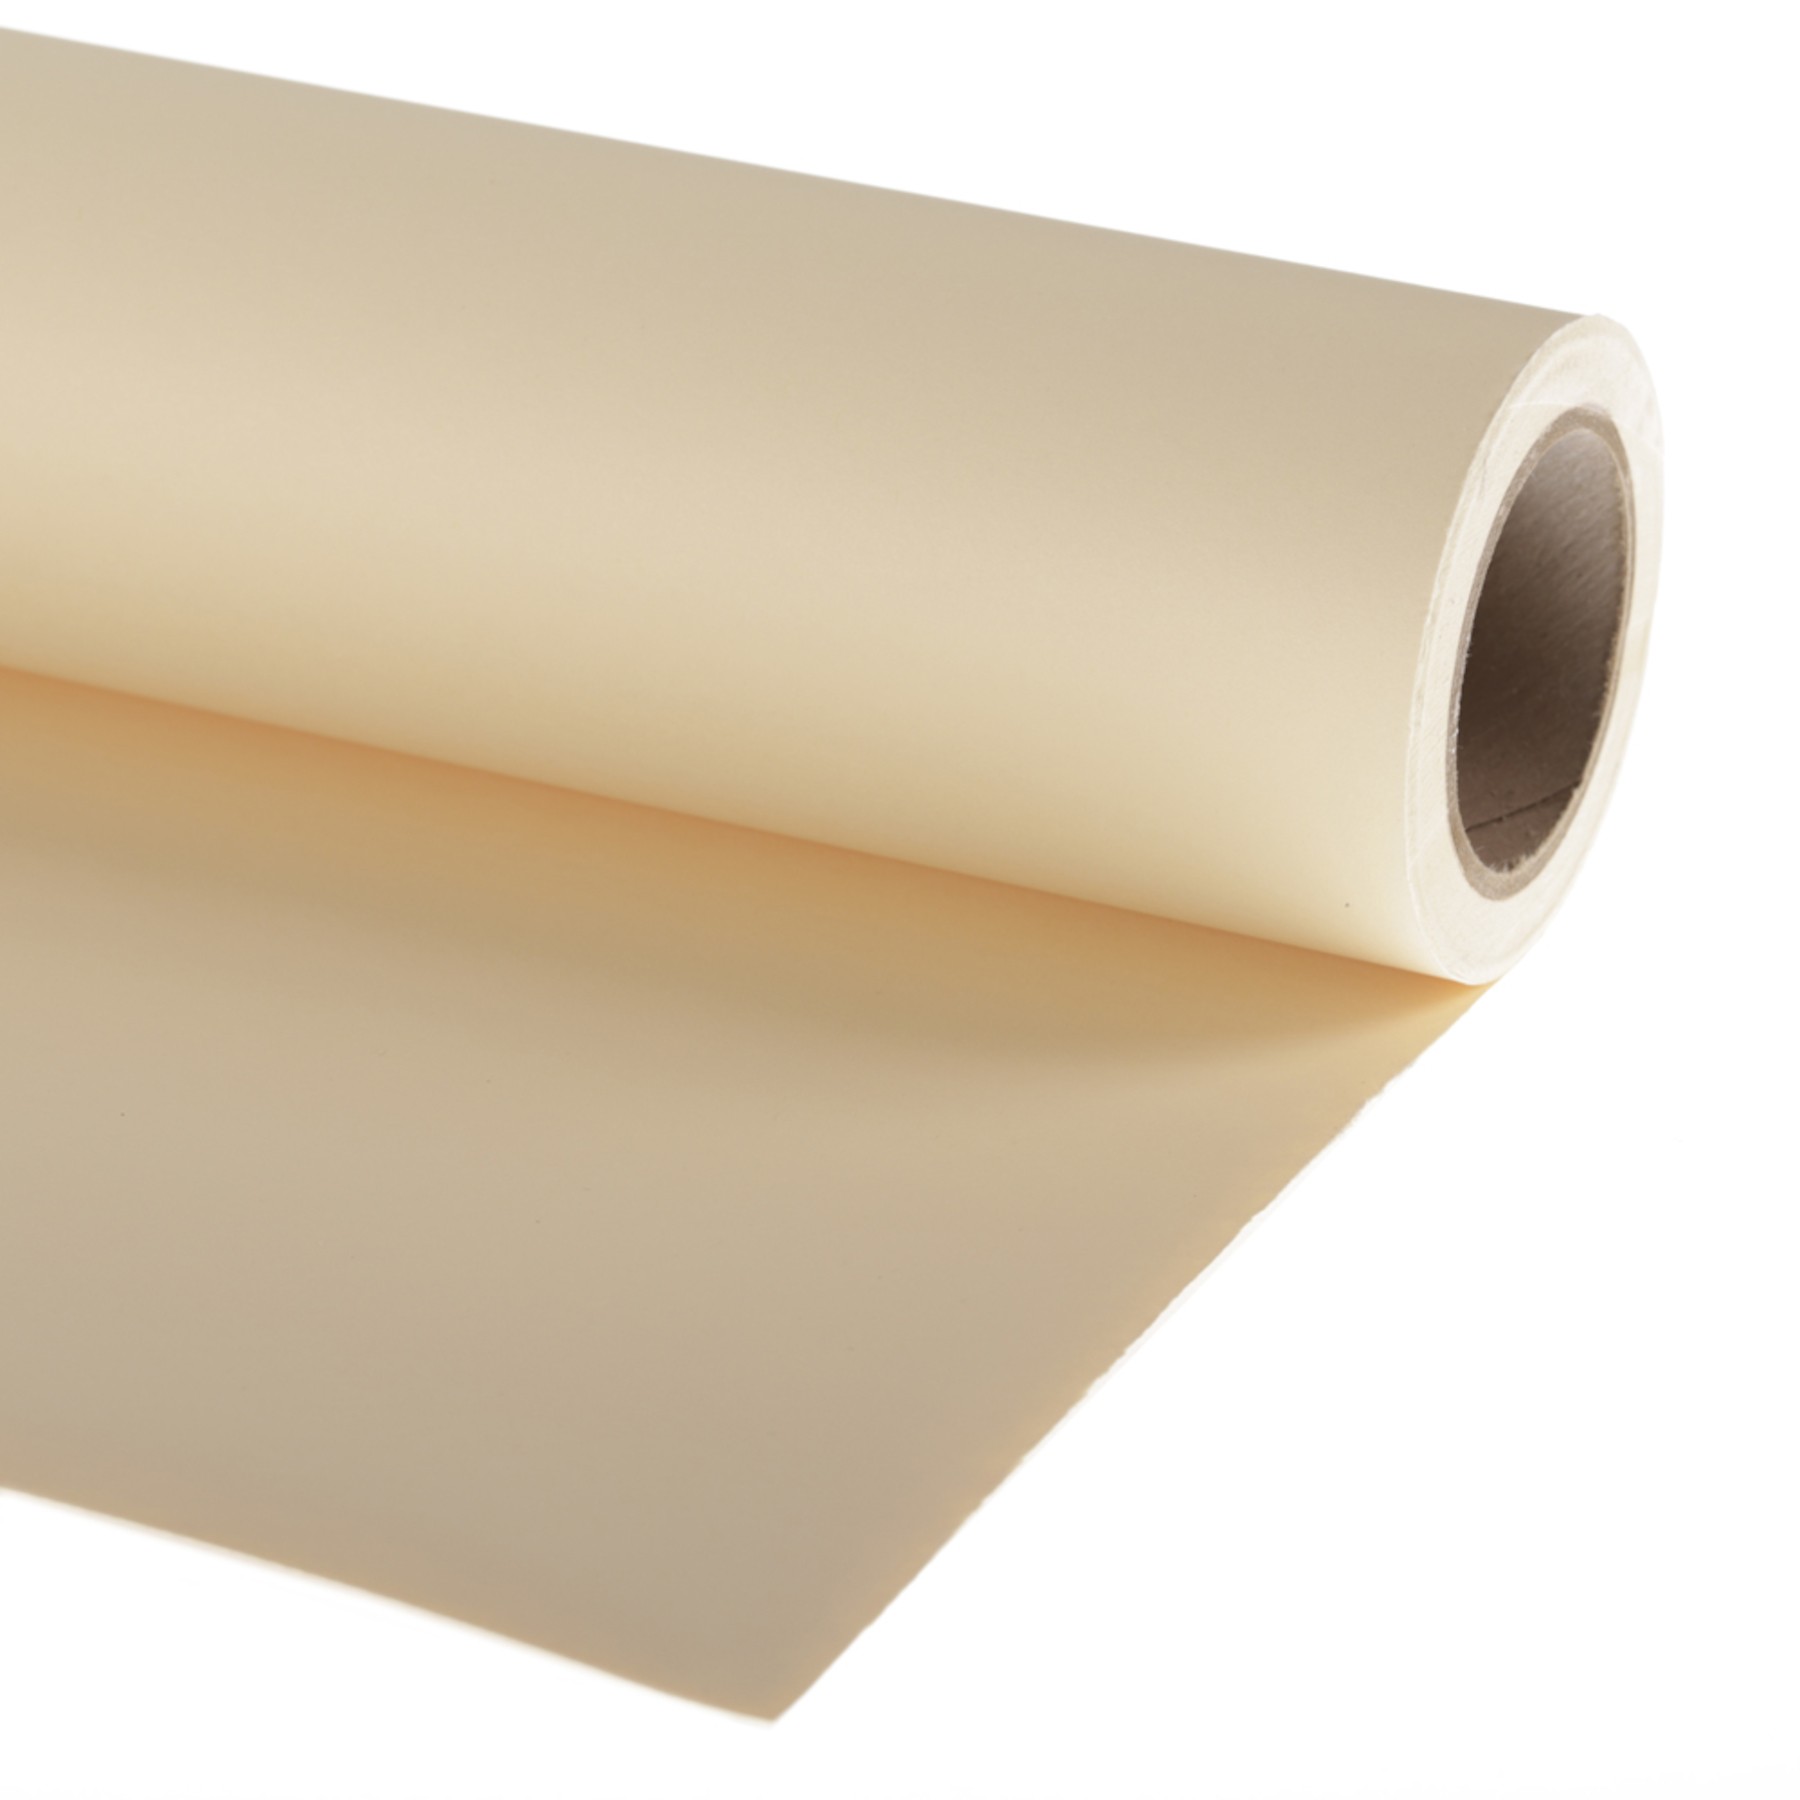 Lastolite Background Paper Roll 2.72 x 11m Ivory   